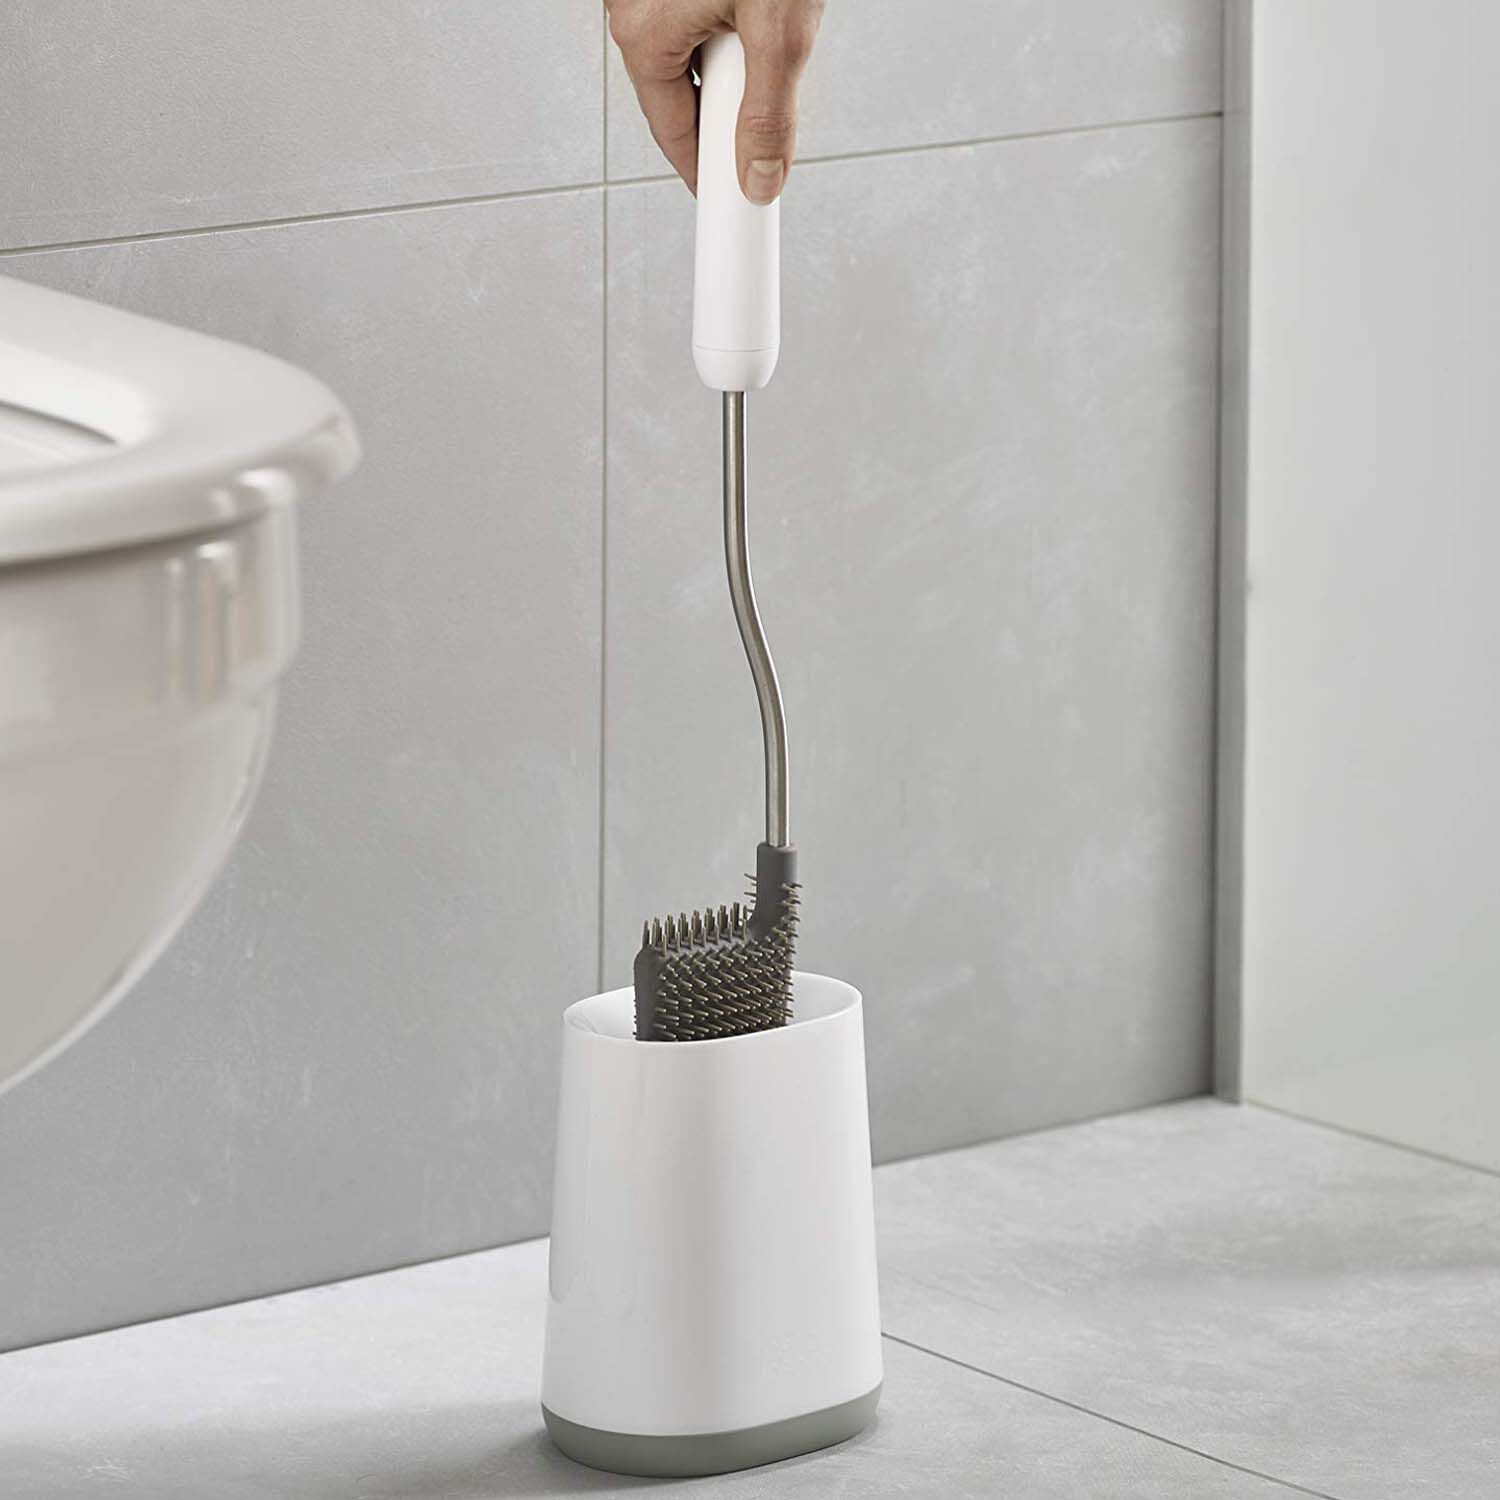 Joseph Joseph Duo Flex Lite More + - Home Brush Toilet Store